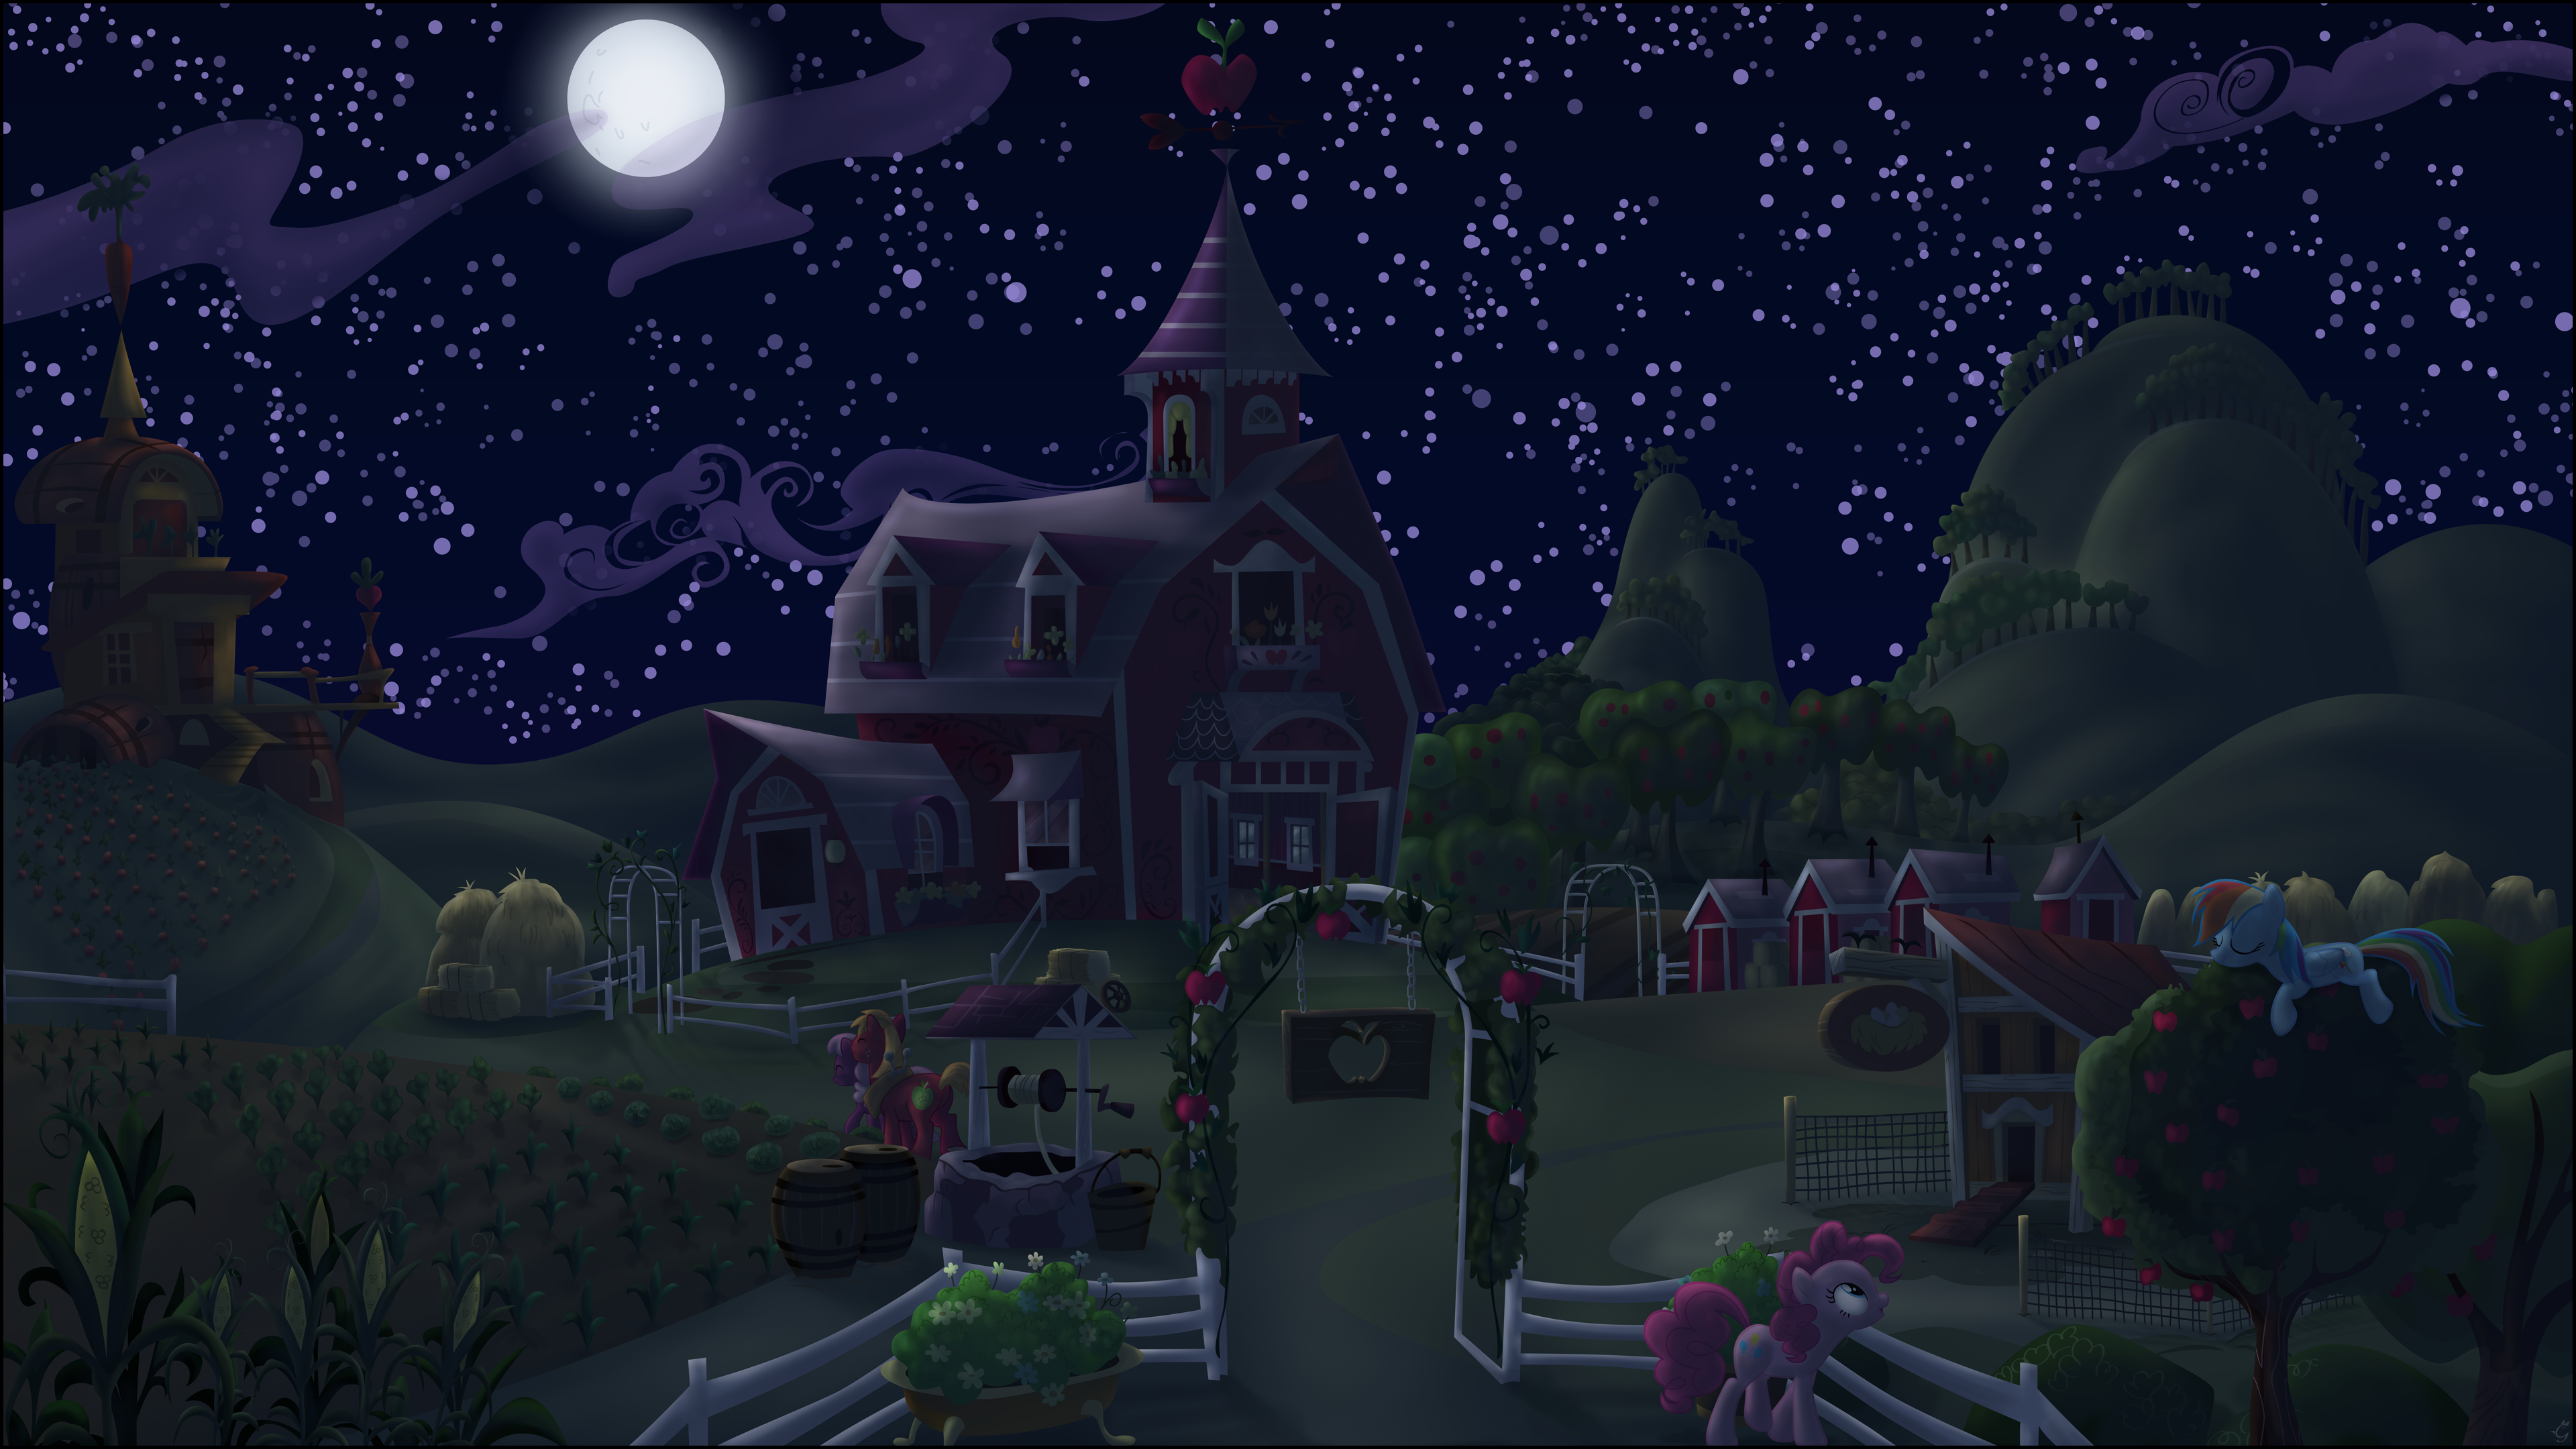 Midnight at the Apple Farm by Stinkehund